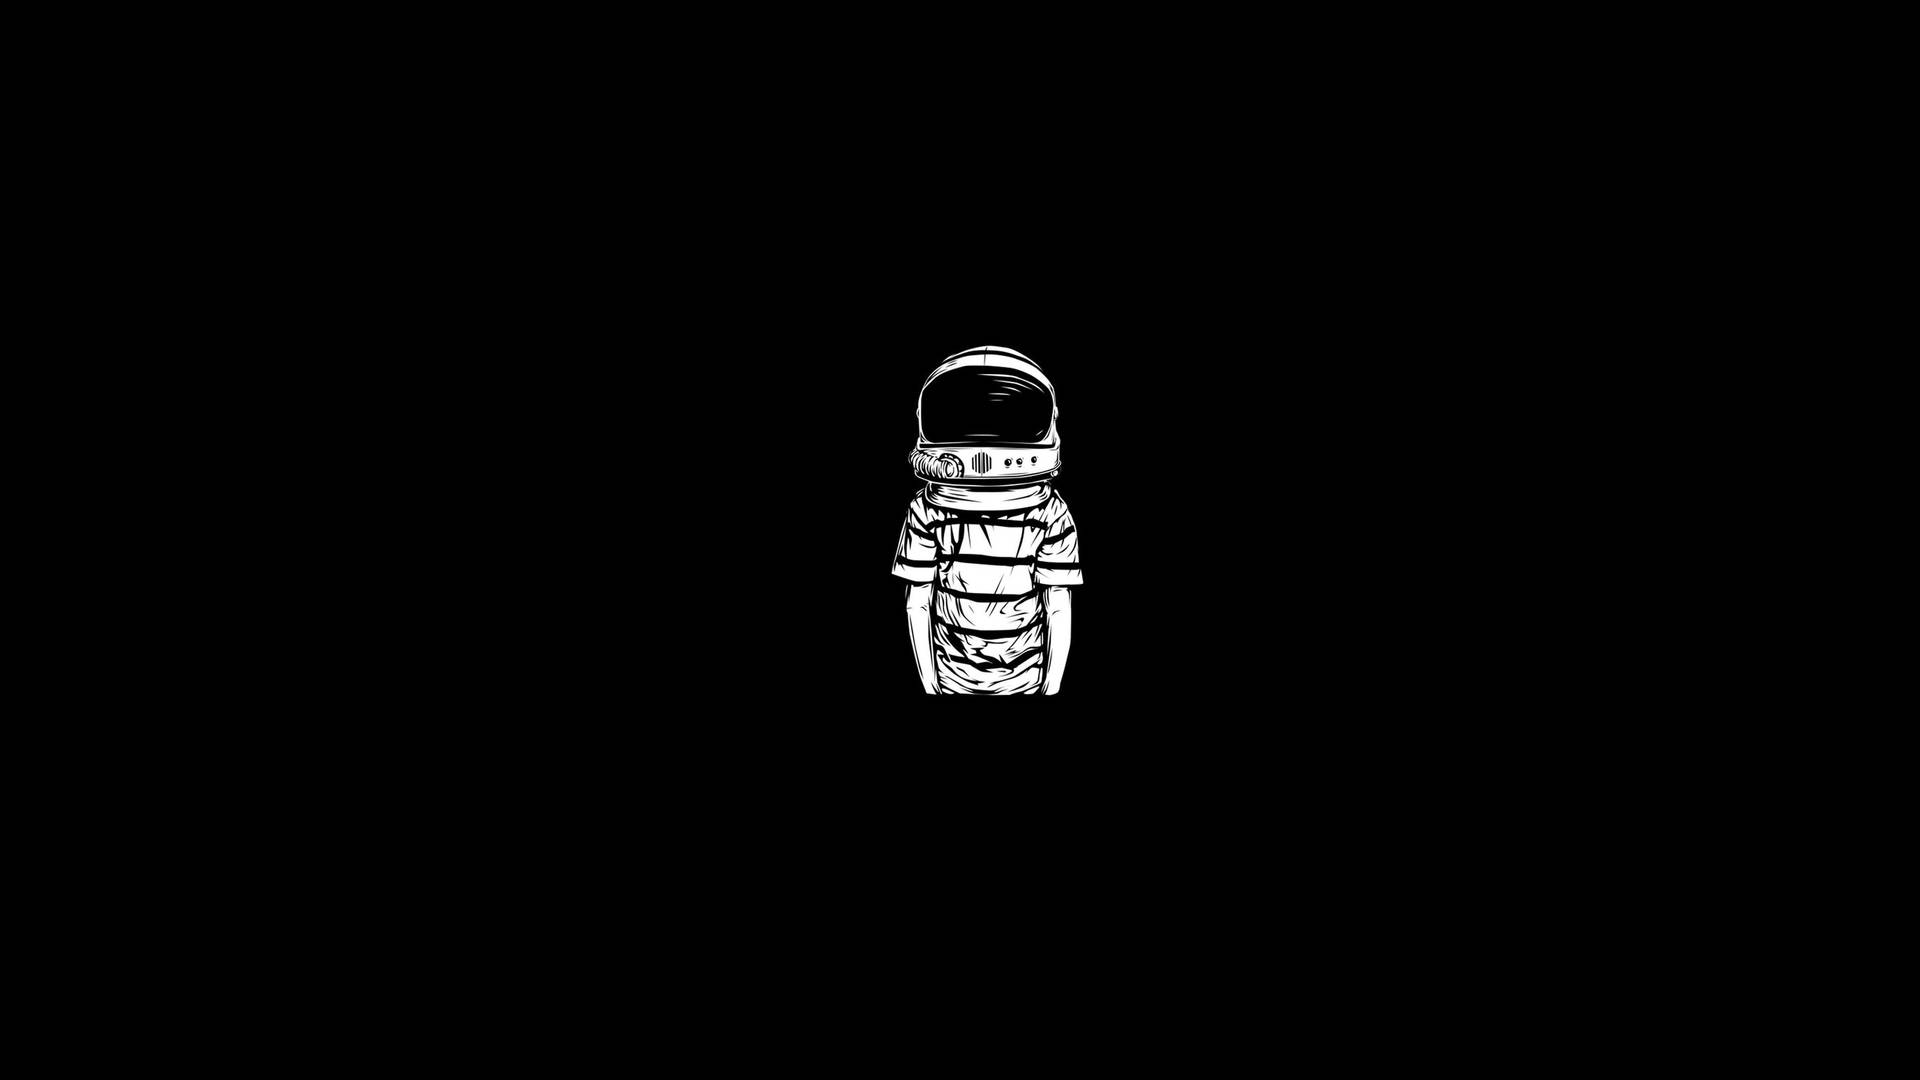 Black And White Astronaut Minimal Logo Wallpaper